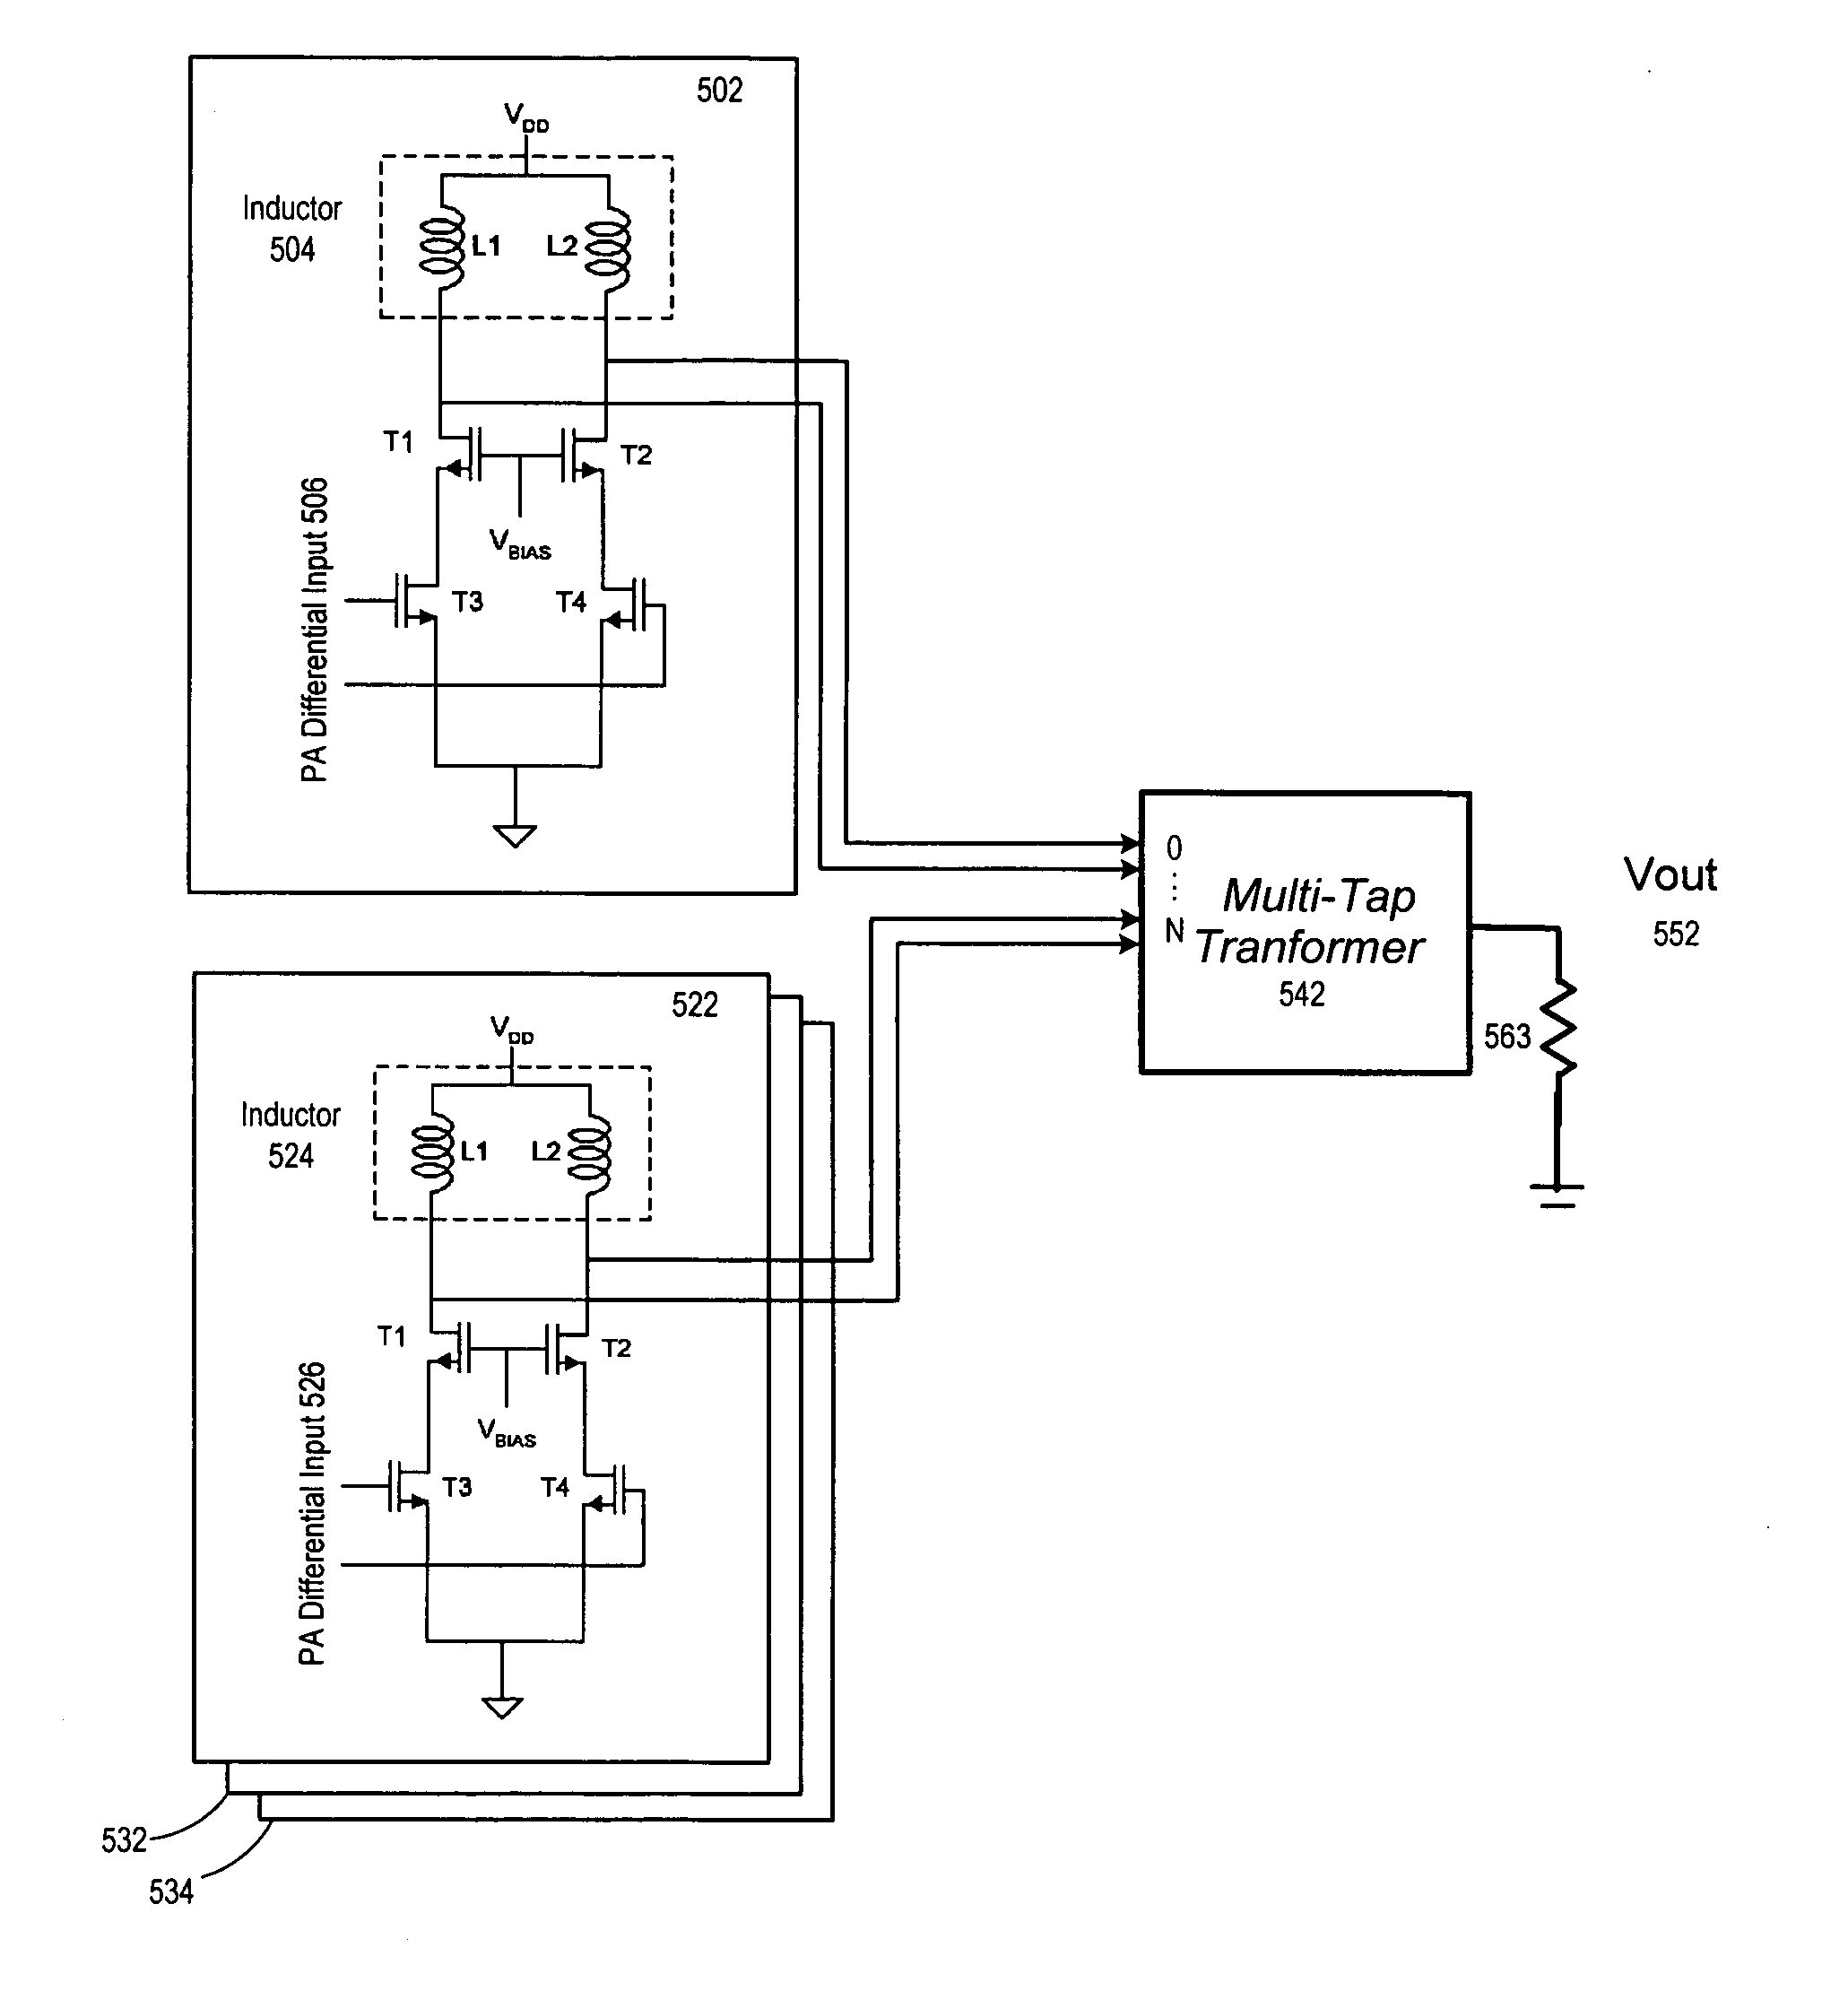 Multilevel power amplifier architecture using multi-tap transformer